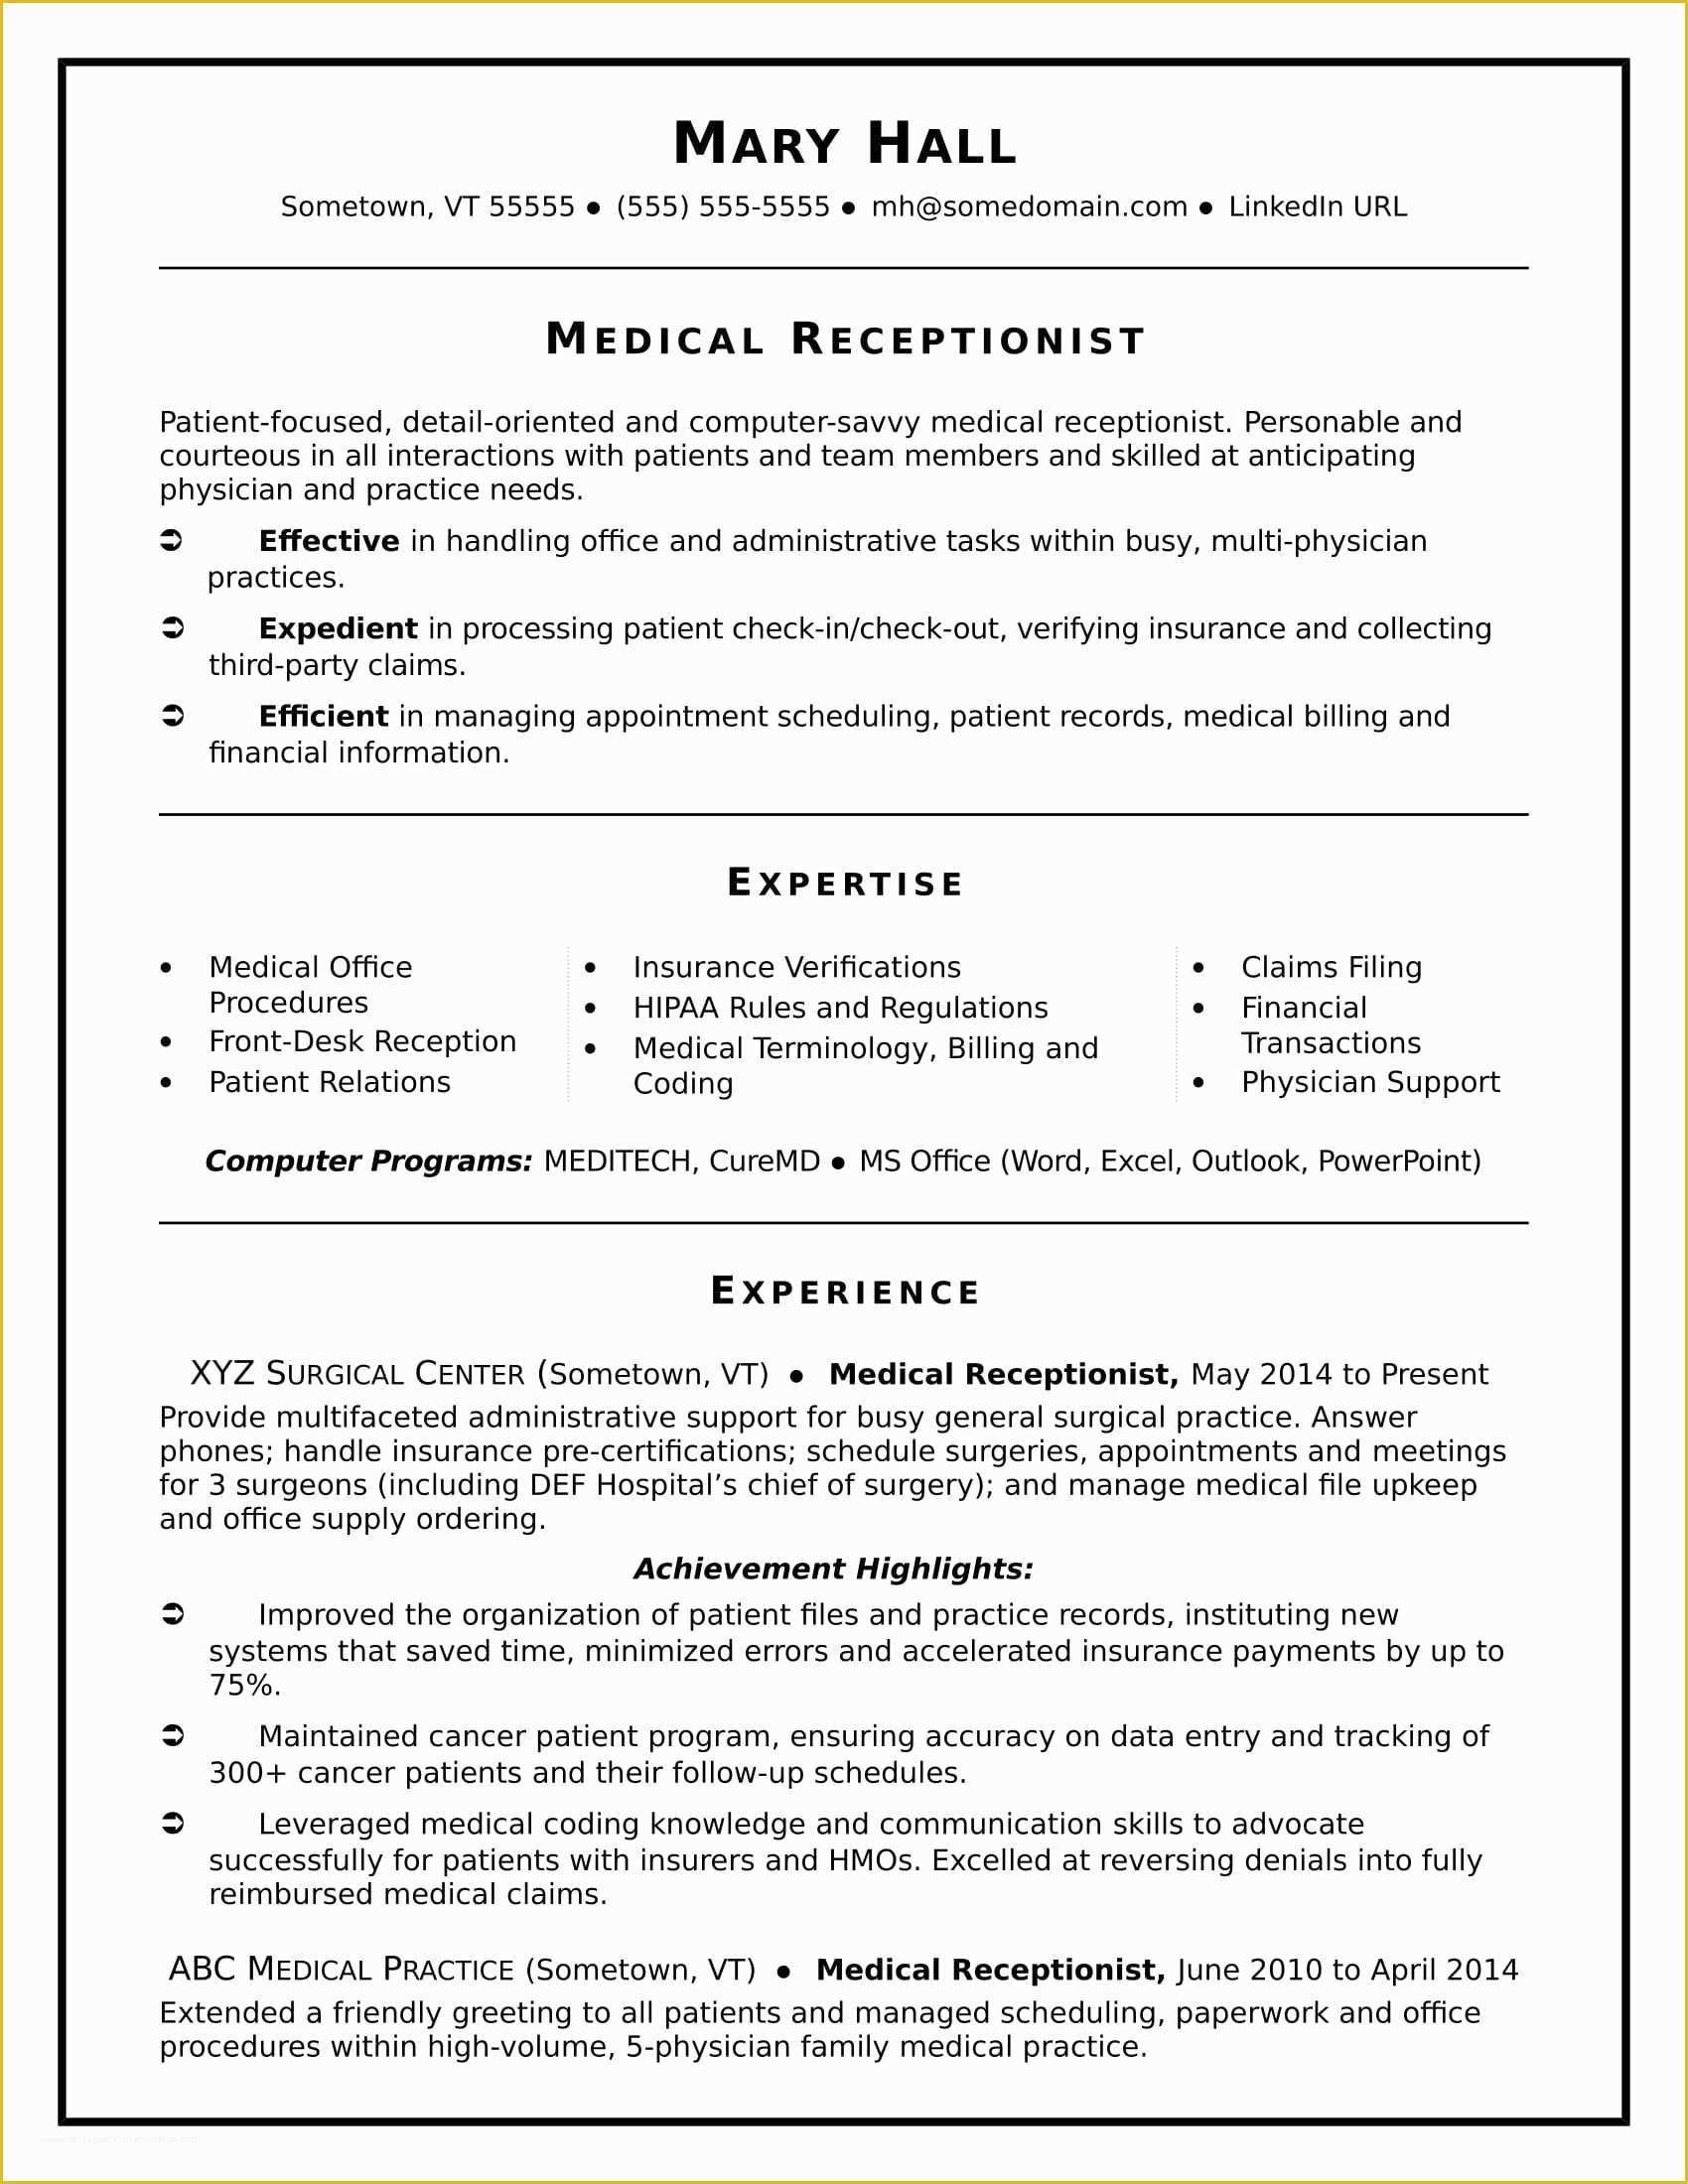 Free Medical Resume Templates Microsoft Word Of Medical Receptionist Resume Sample